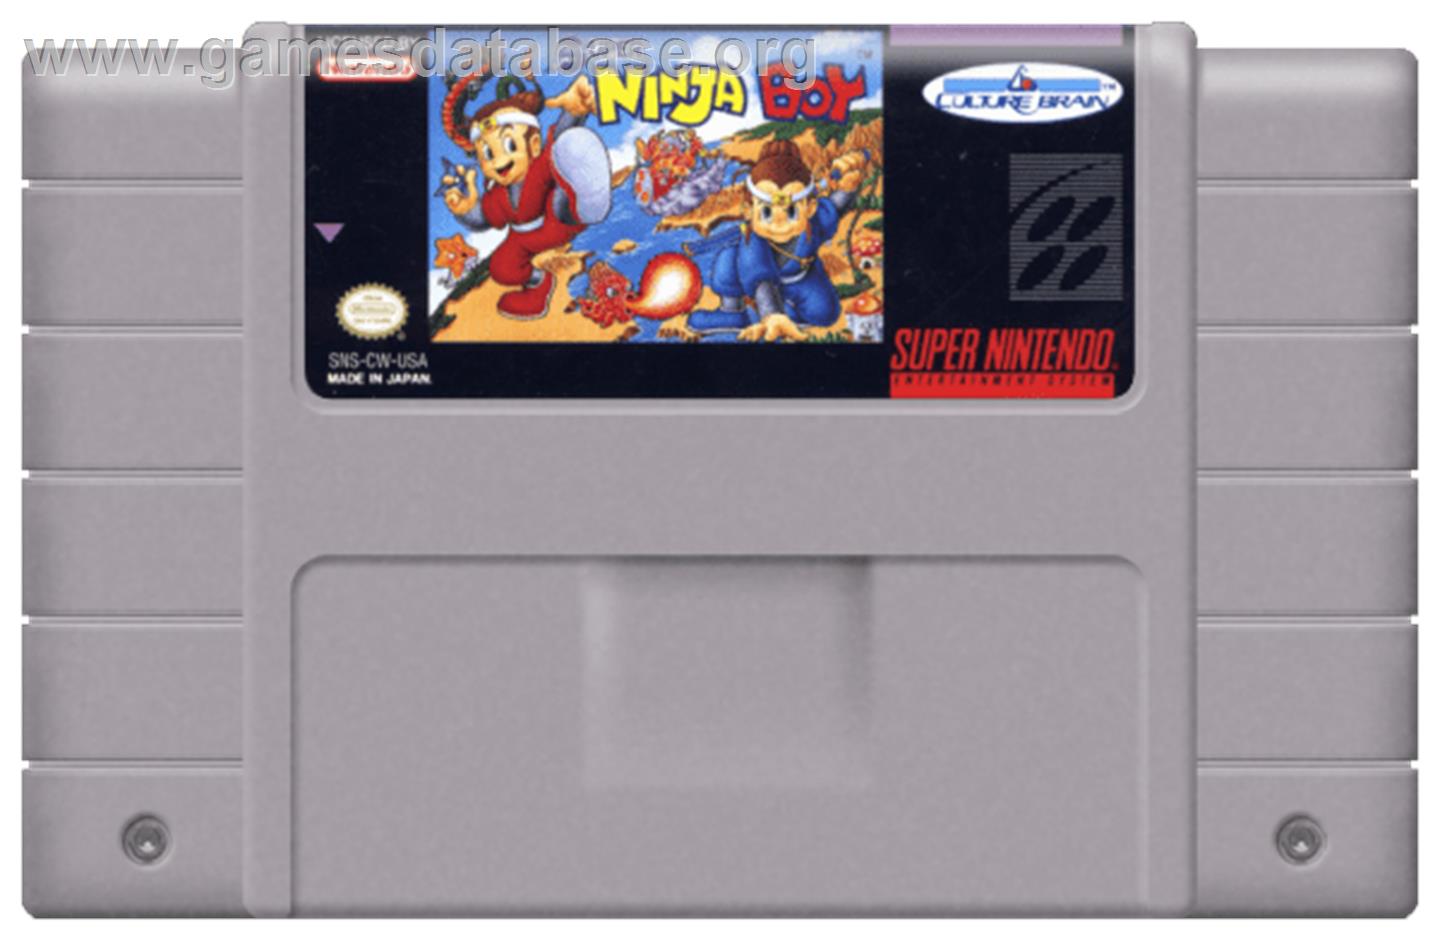 Super Ninja Boy - Nintendo SNES - Artwork - Cartridge